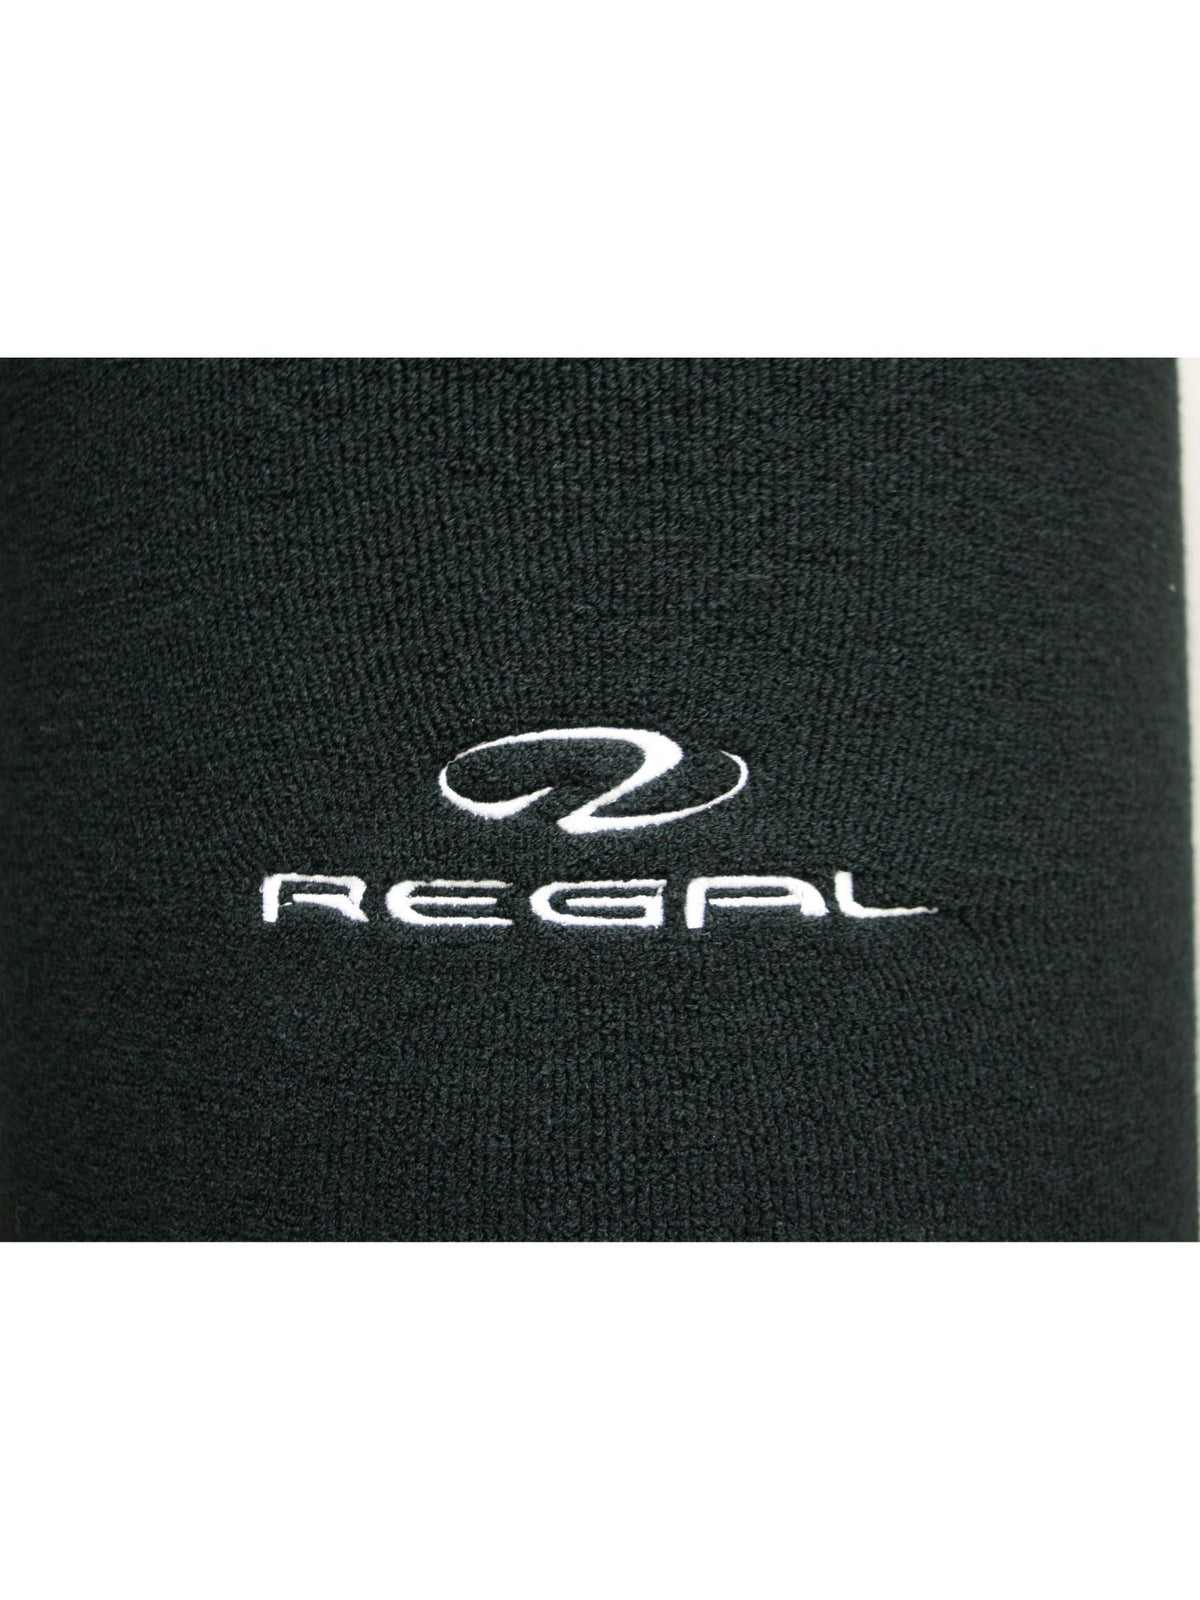 Regal Fender Cover Logo